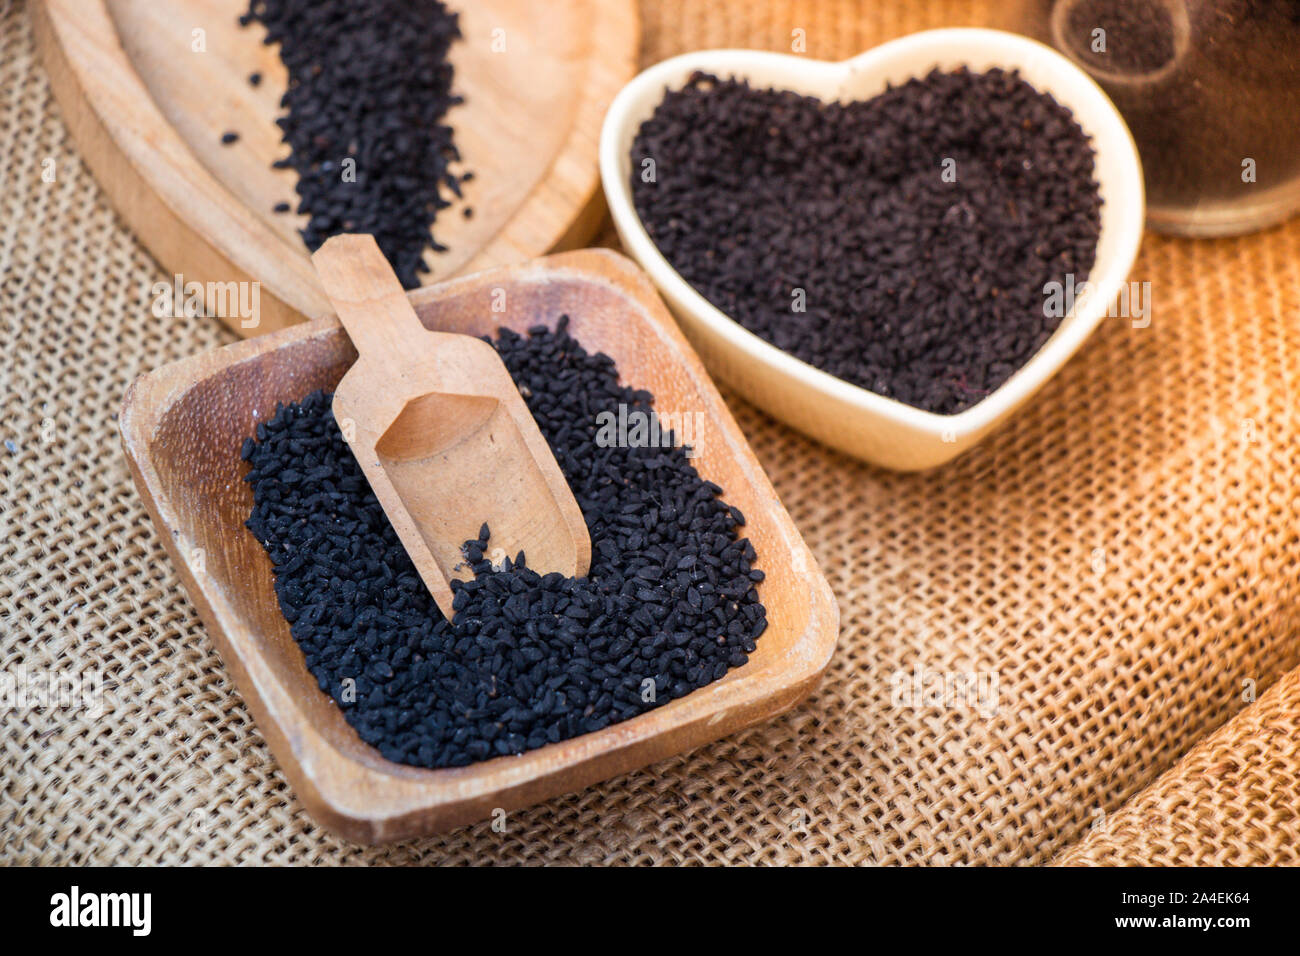 Nigella sativa Black Cumin kalonji seeds (kalonji) in view Stock Photo